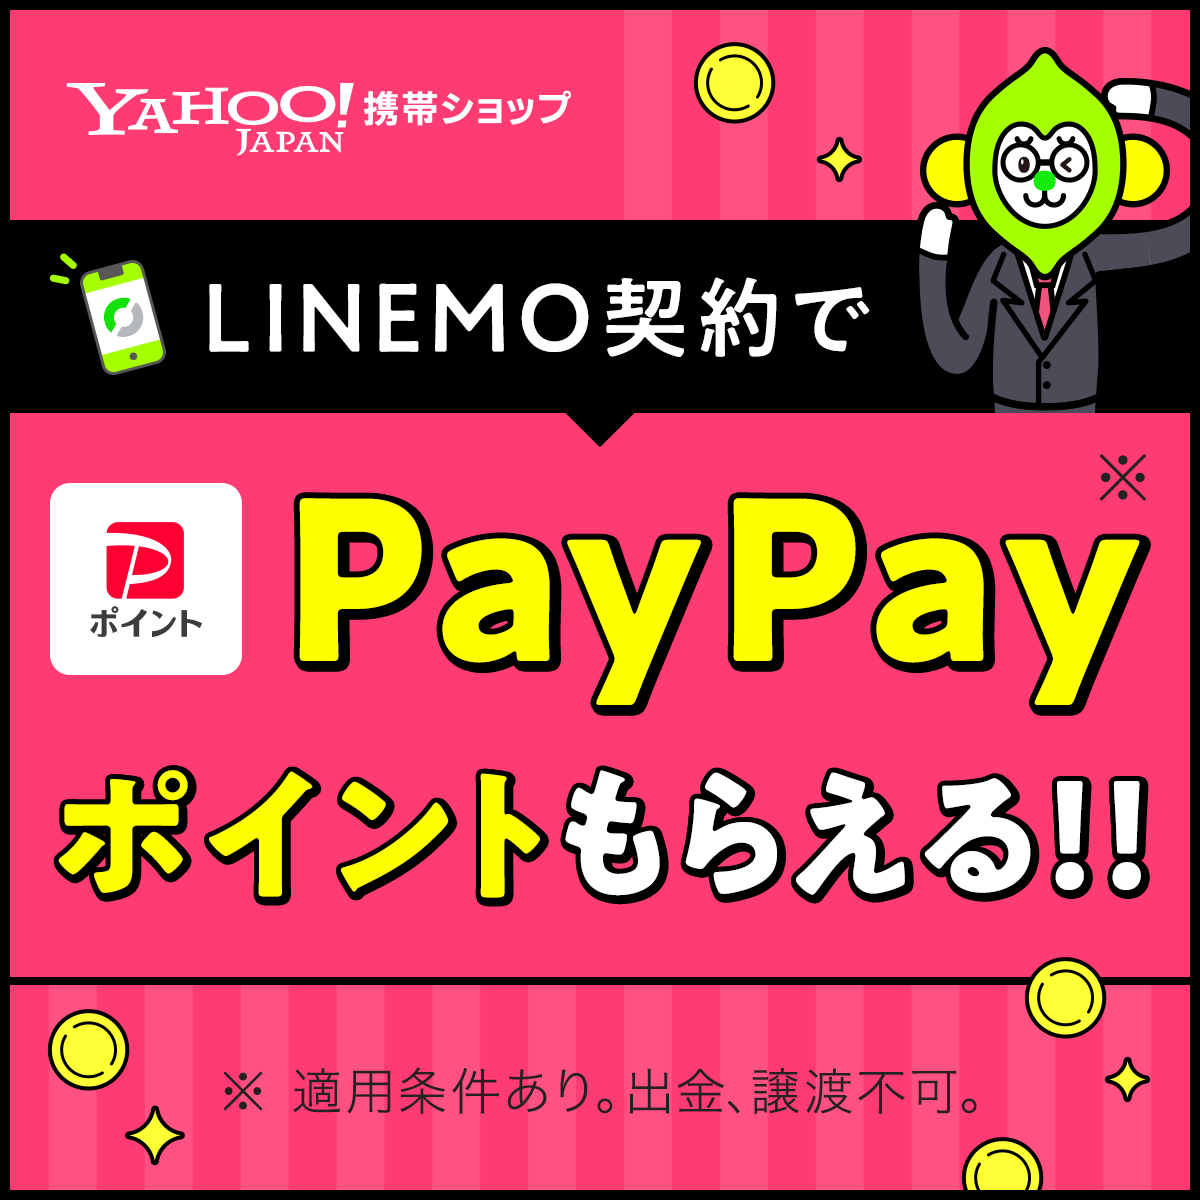 LINEMO契約でPayPayポイントもらえる!!_LINEMO